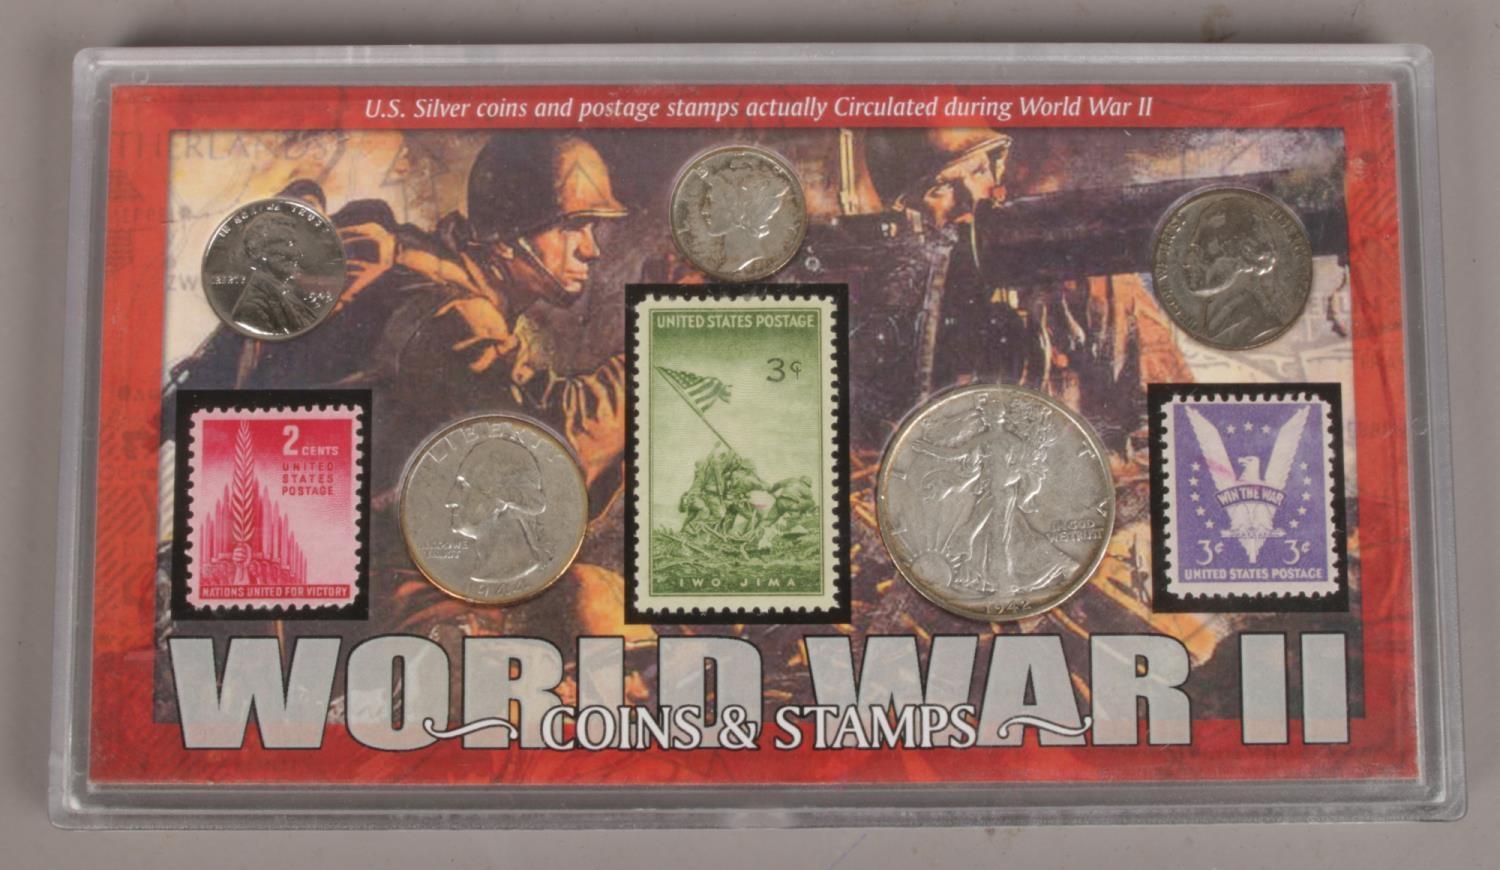 A World war II U.S coins & stamp set.